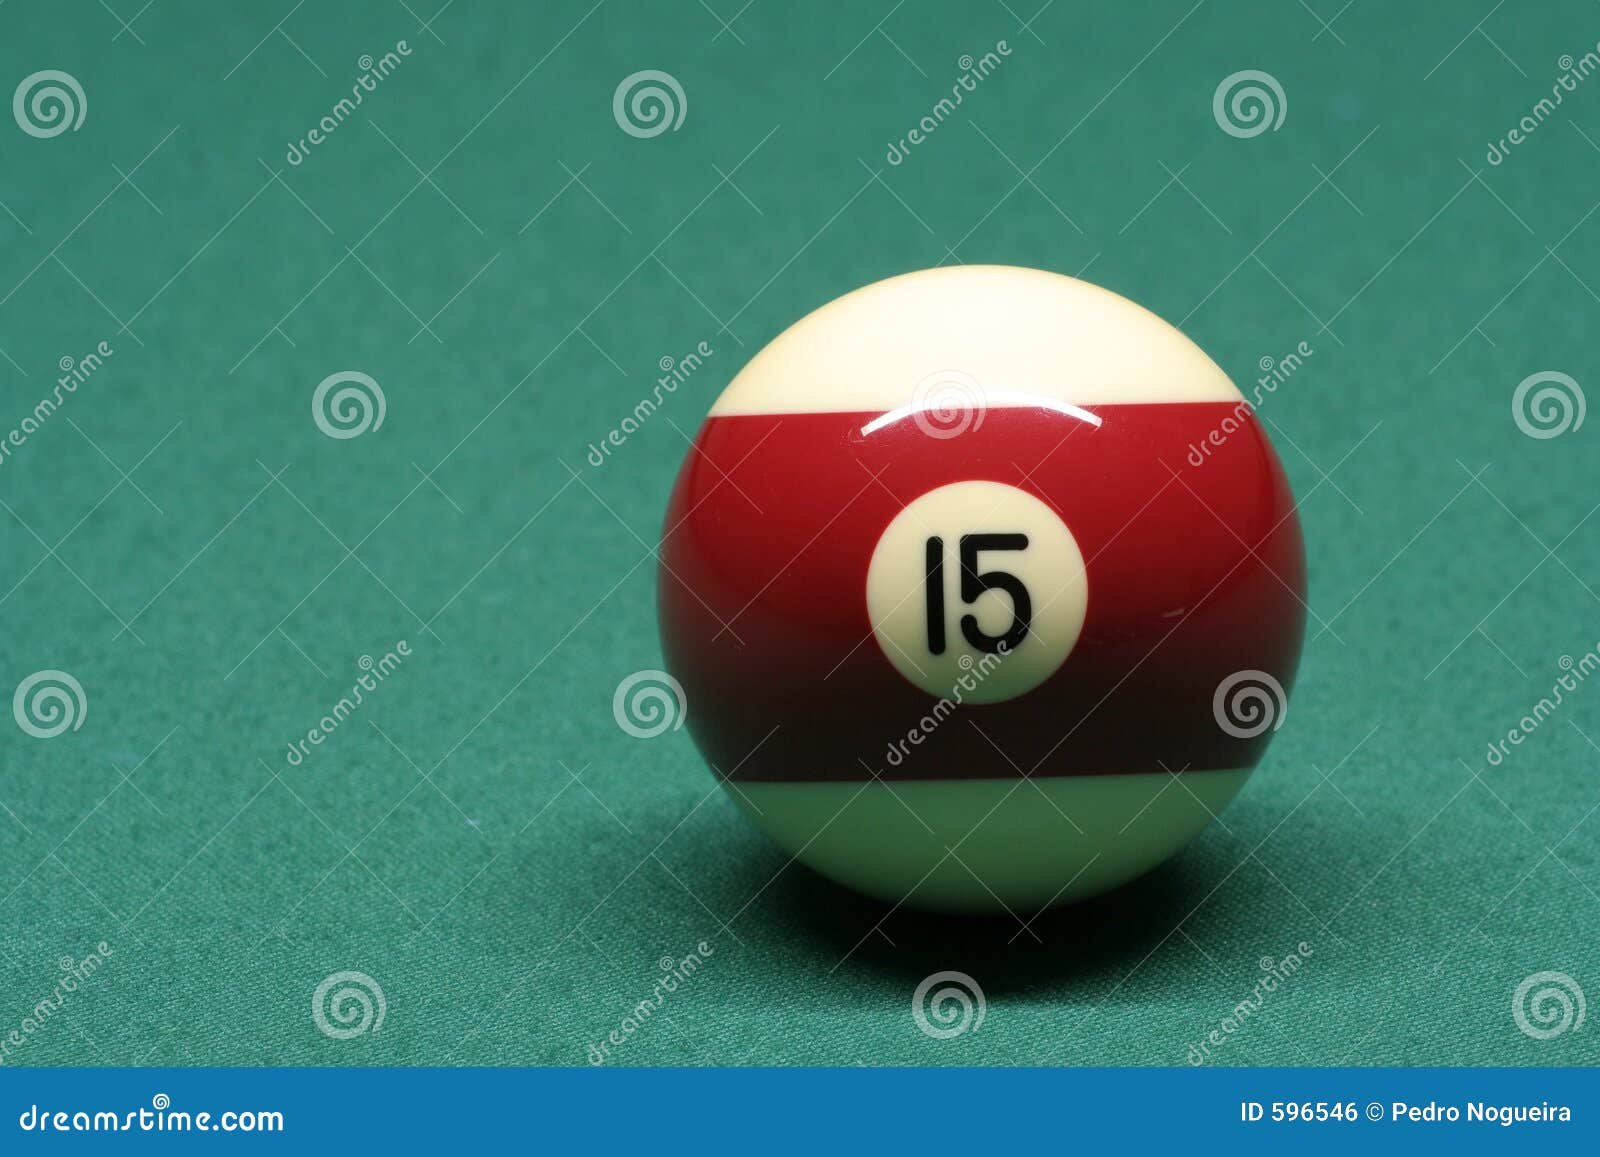 pool-ball-number-15-596546.jpg